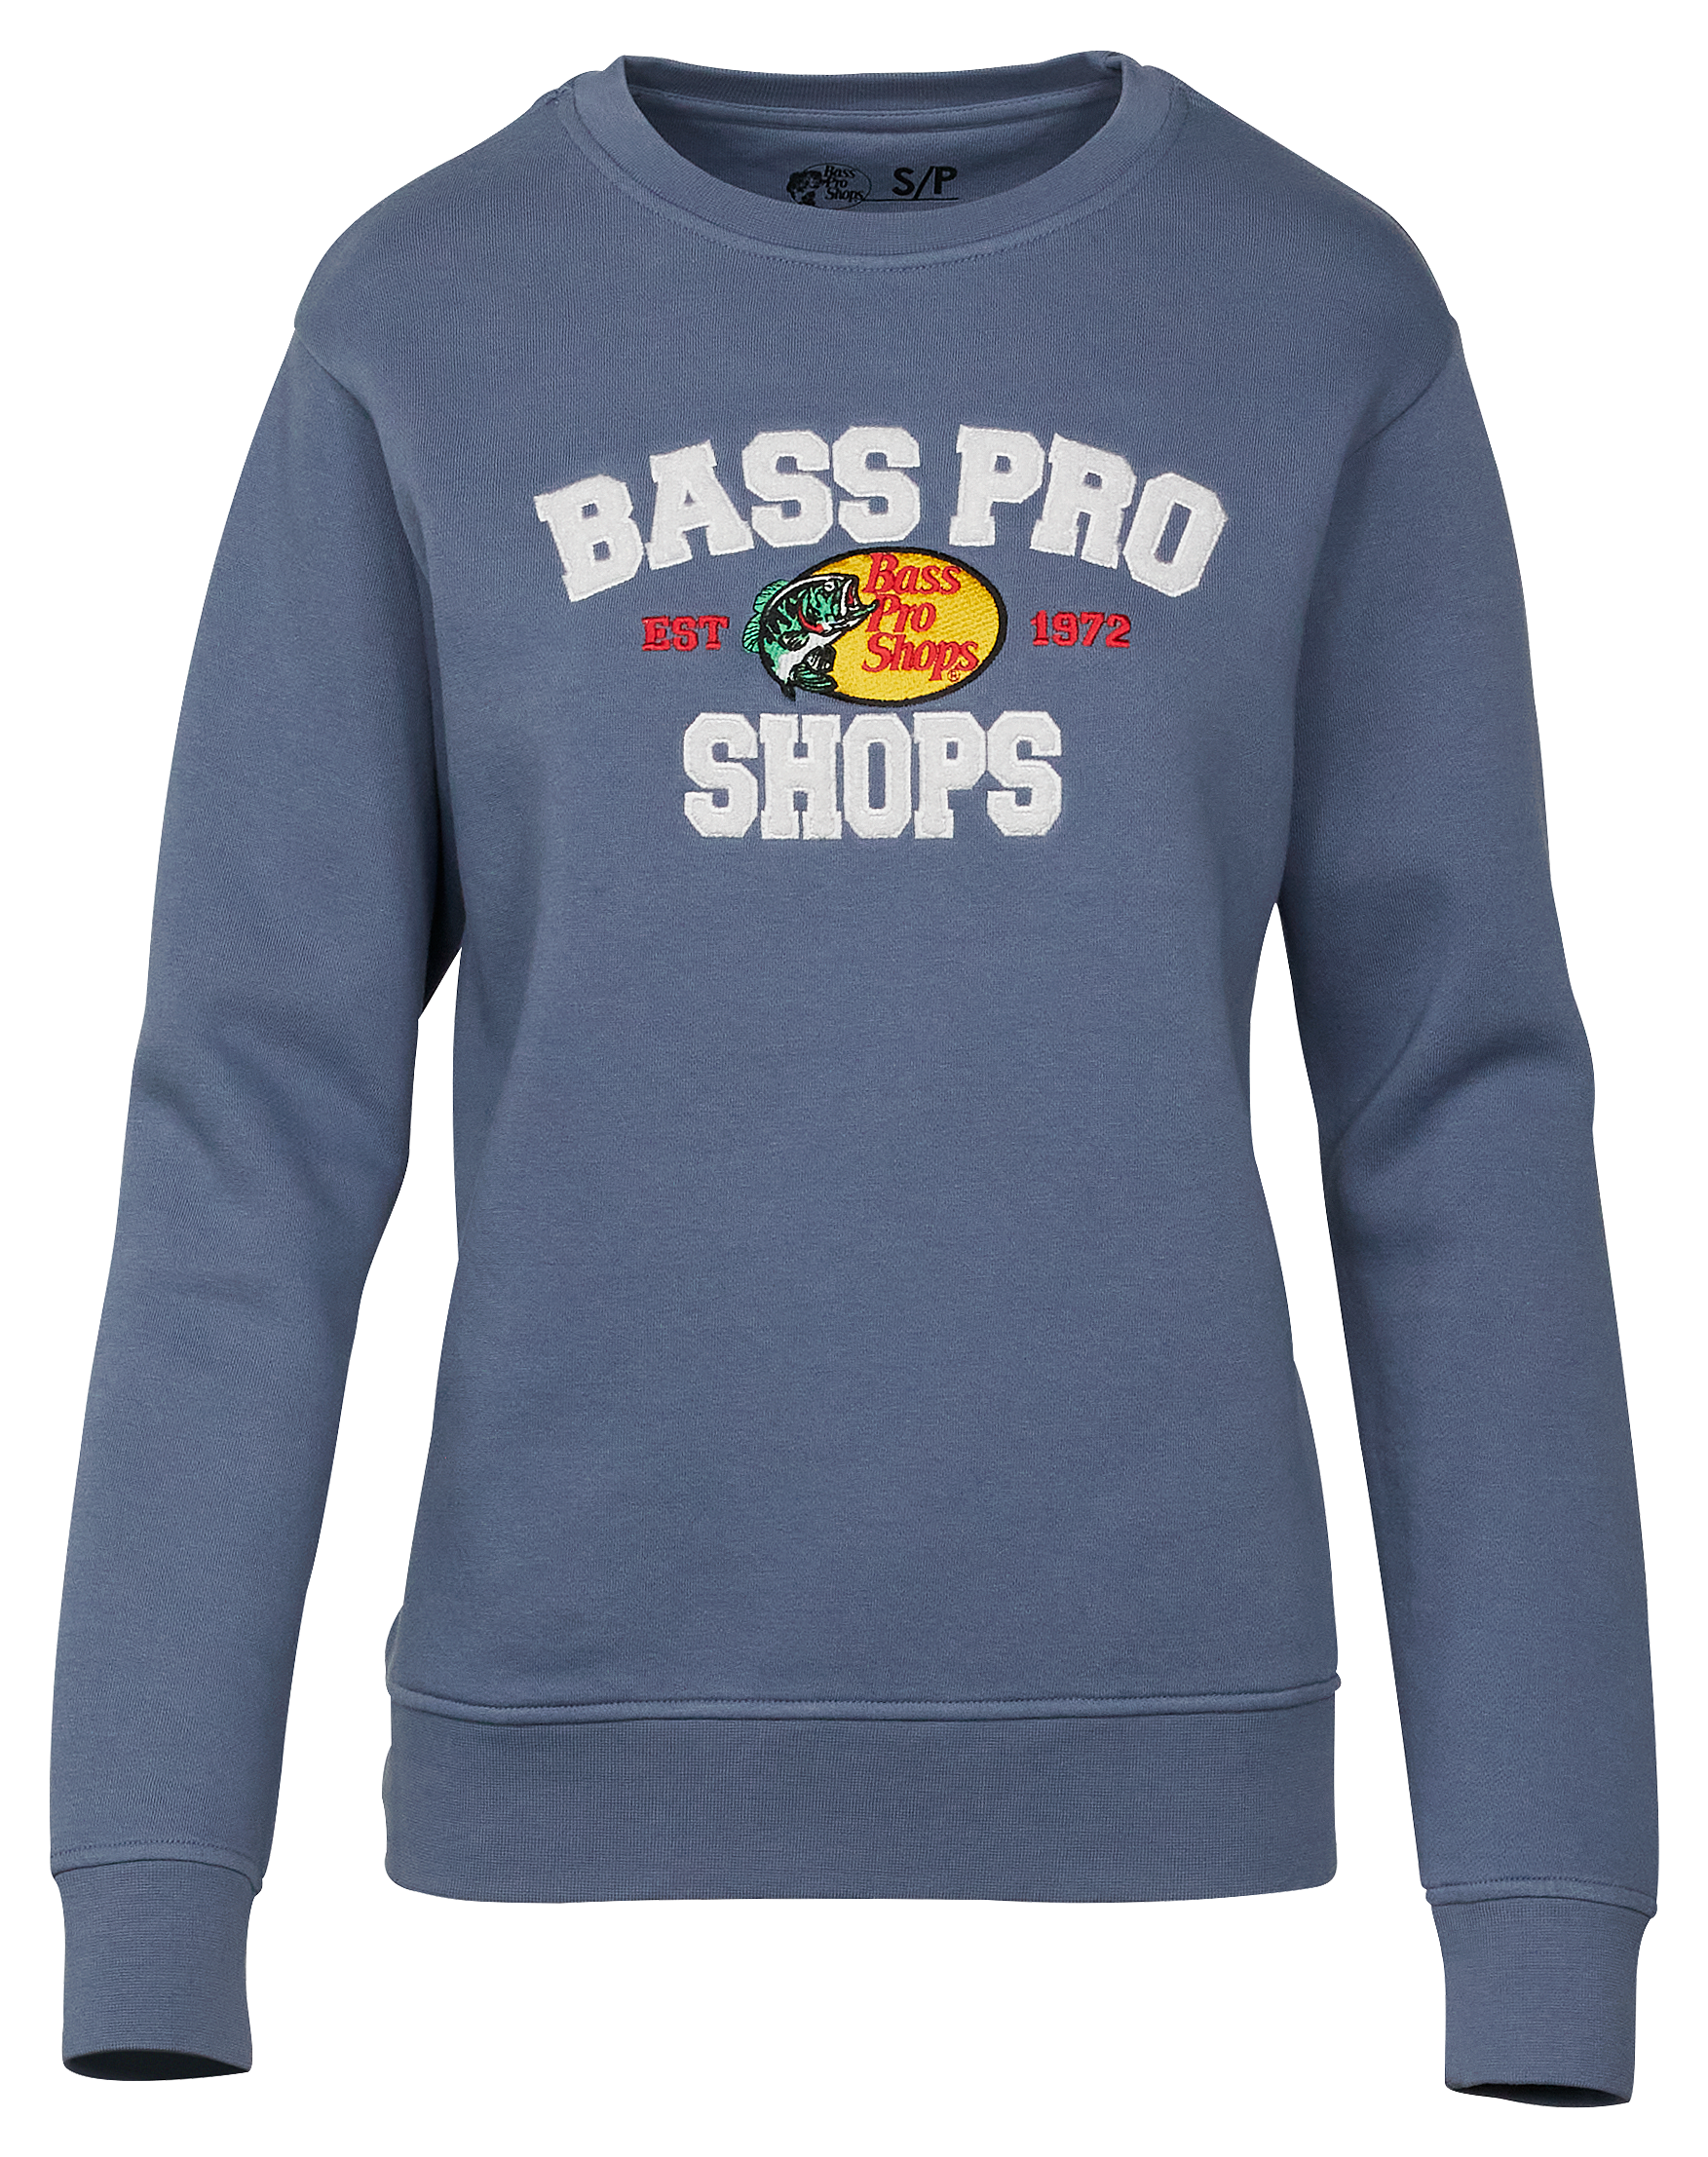 Bass Pro Shops Logo Crew-Neck Long-Sleeve Sweatshirt for Ladies - Flint Stone - M